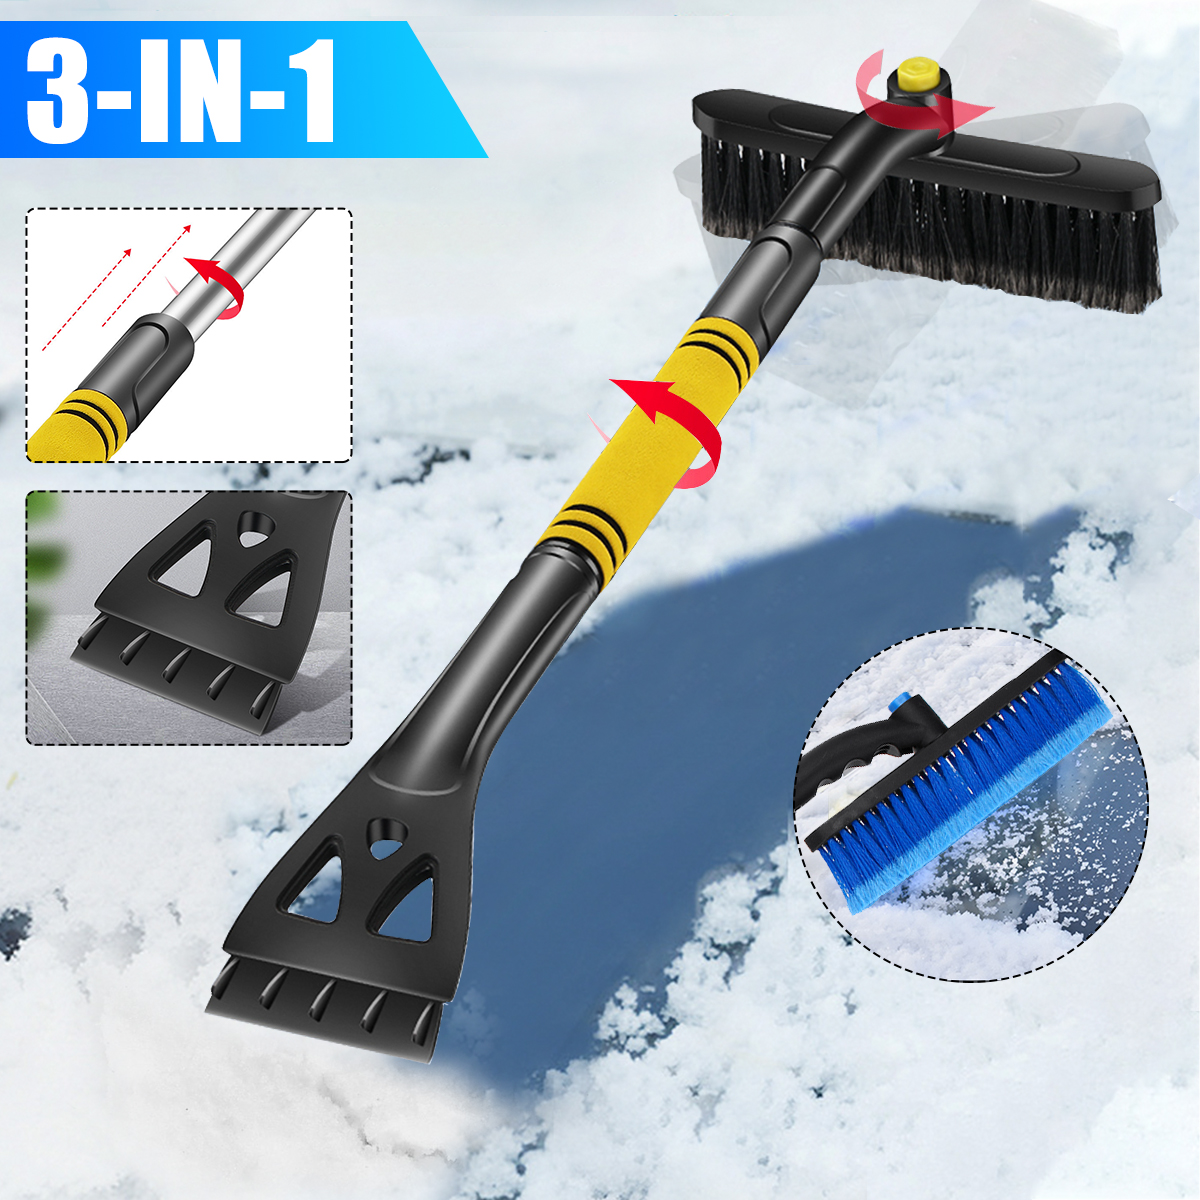 3-IN-1 Rotating Telescopic Snow Shovel Vehicle Winter Shoveling Snow Removing Brush Ice Scraper